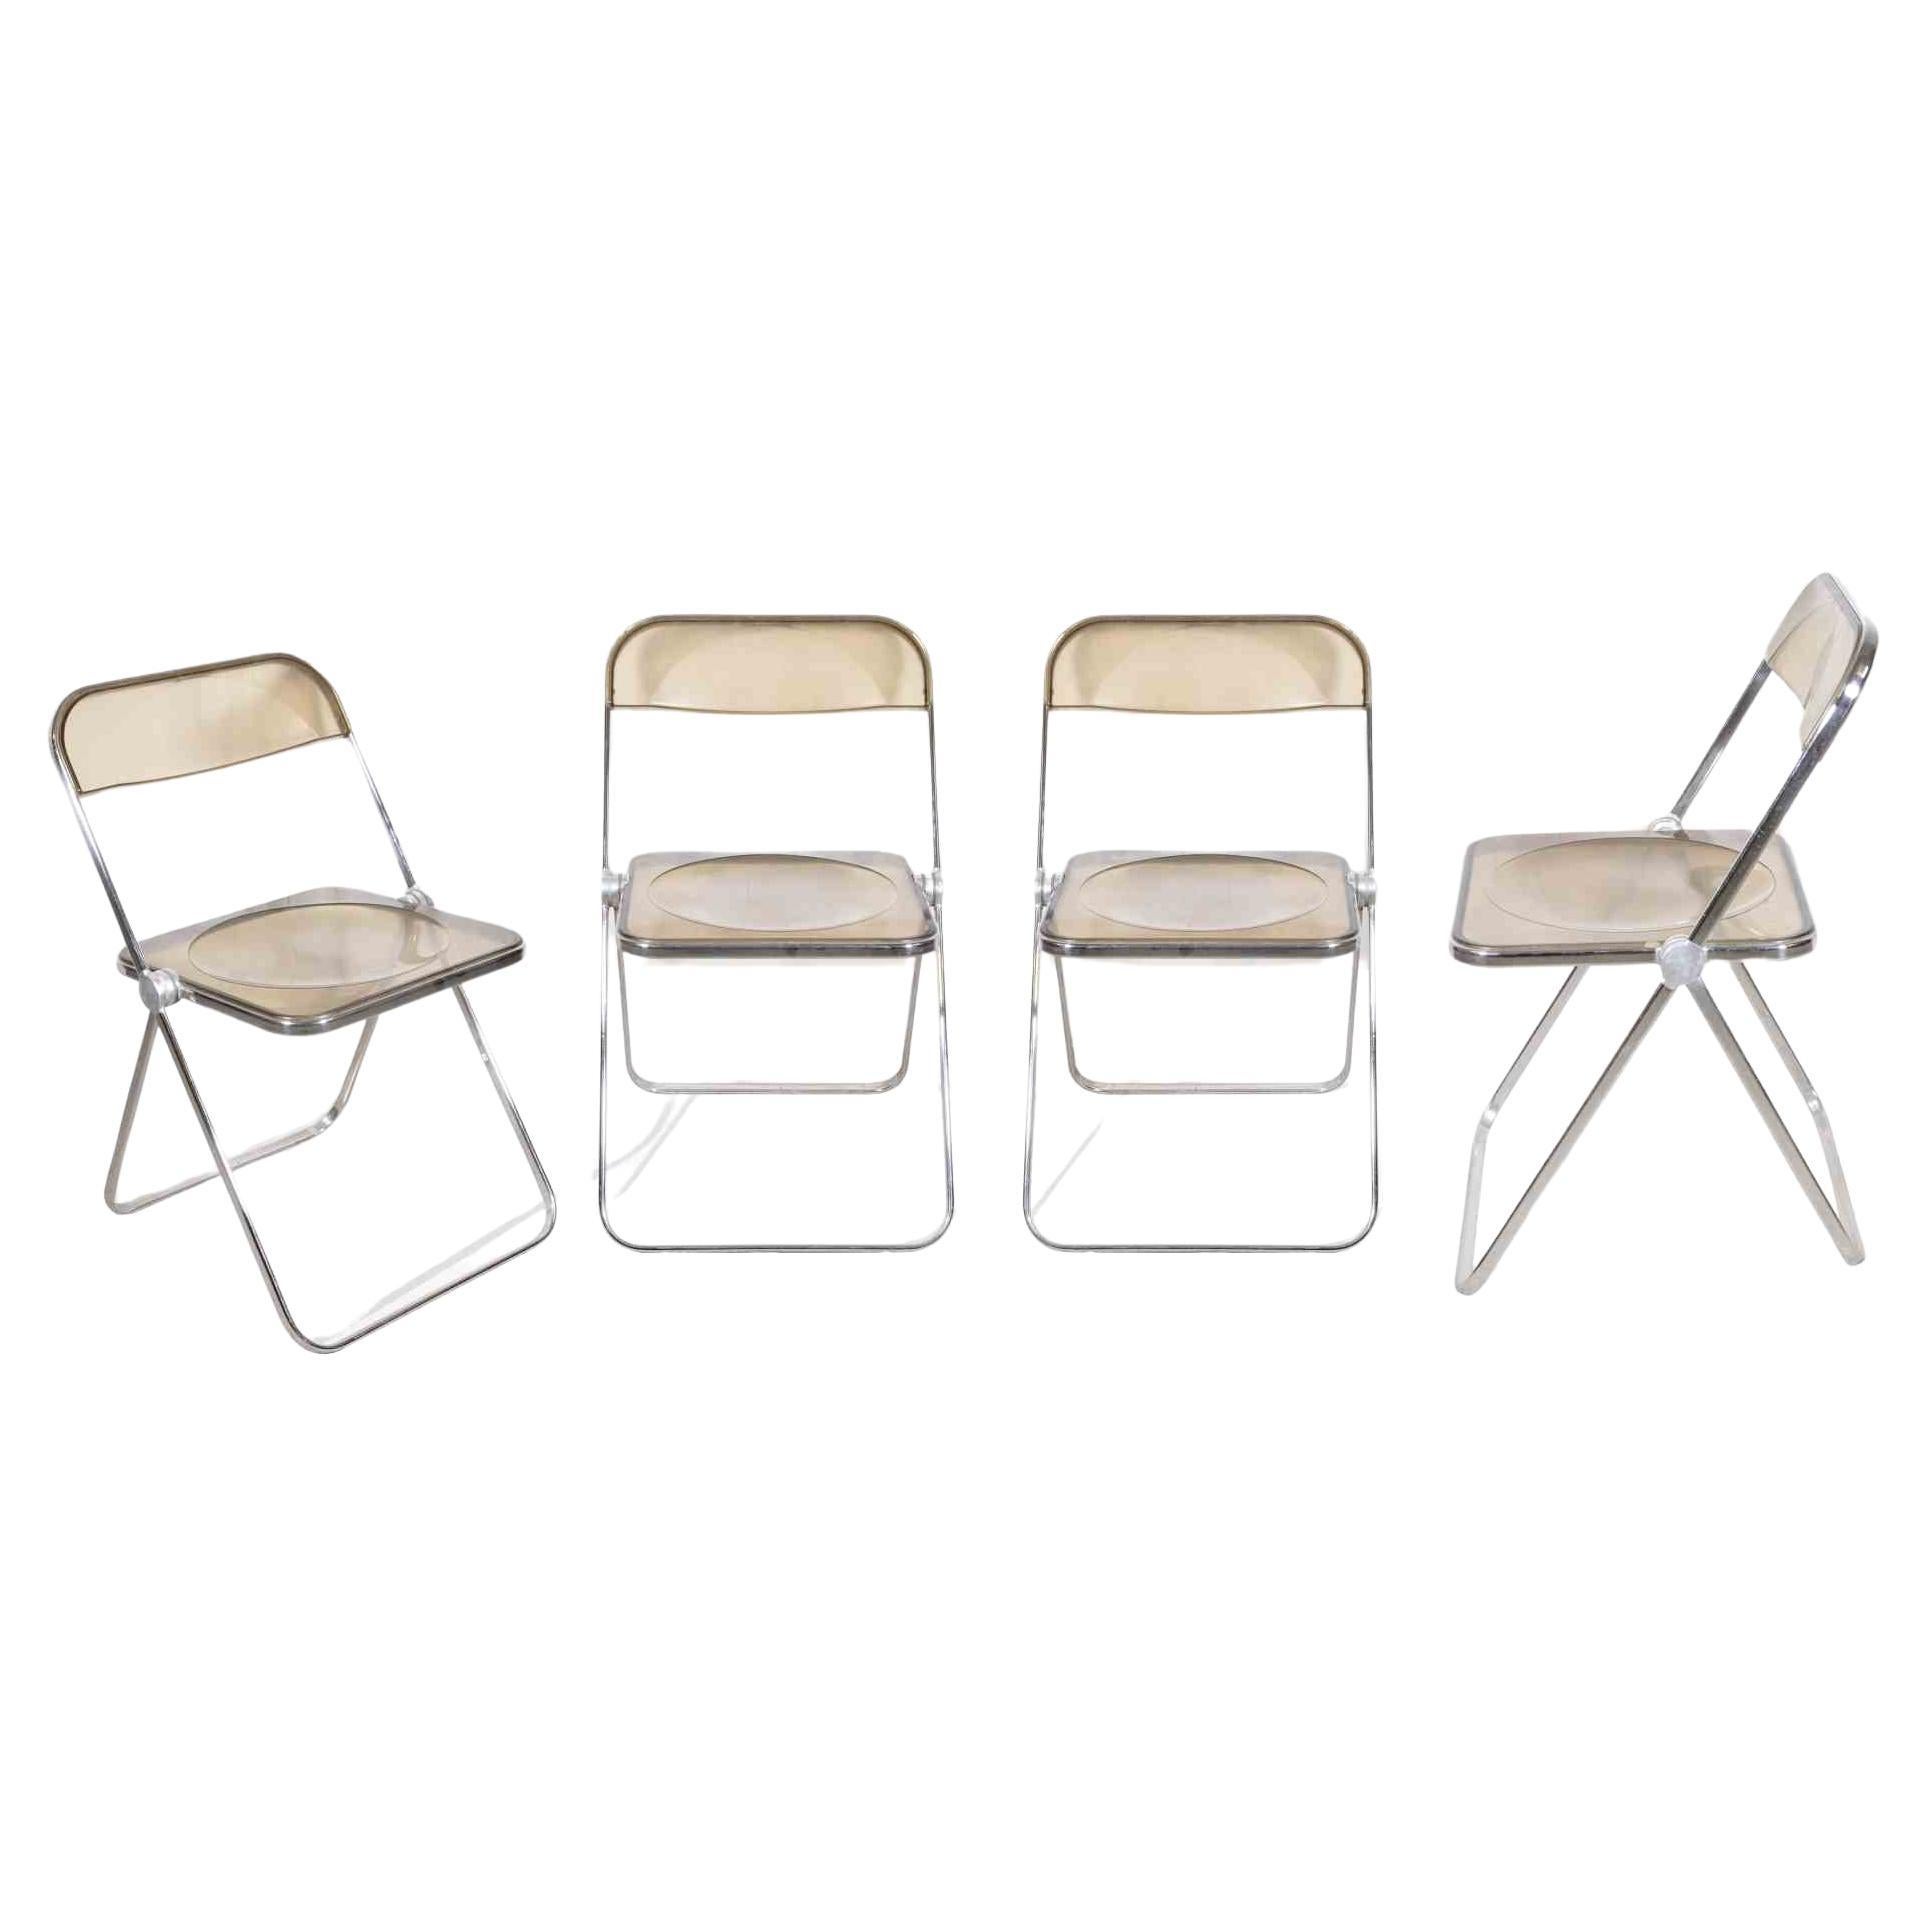 Set of 4 Vintage folding chairs "Sekka" by Anonima Castelli, 1970s